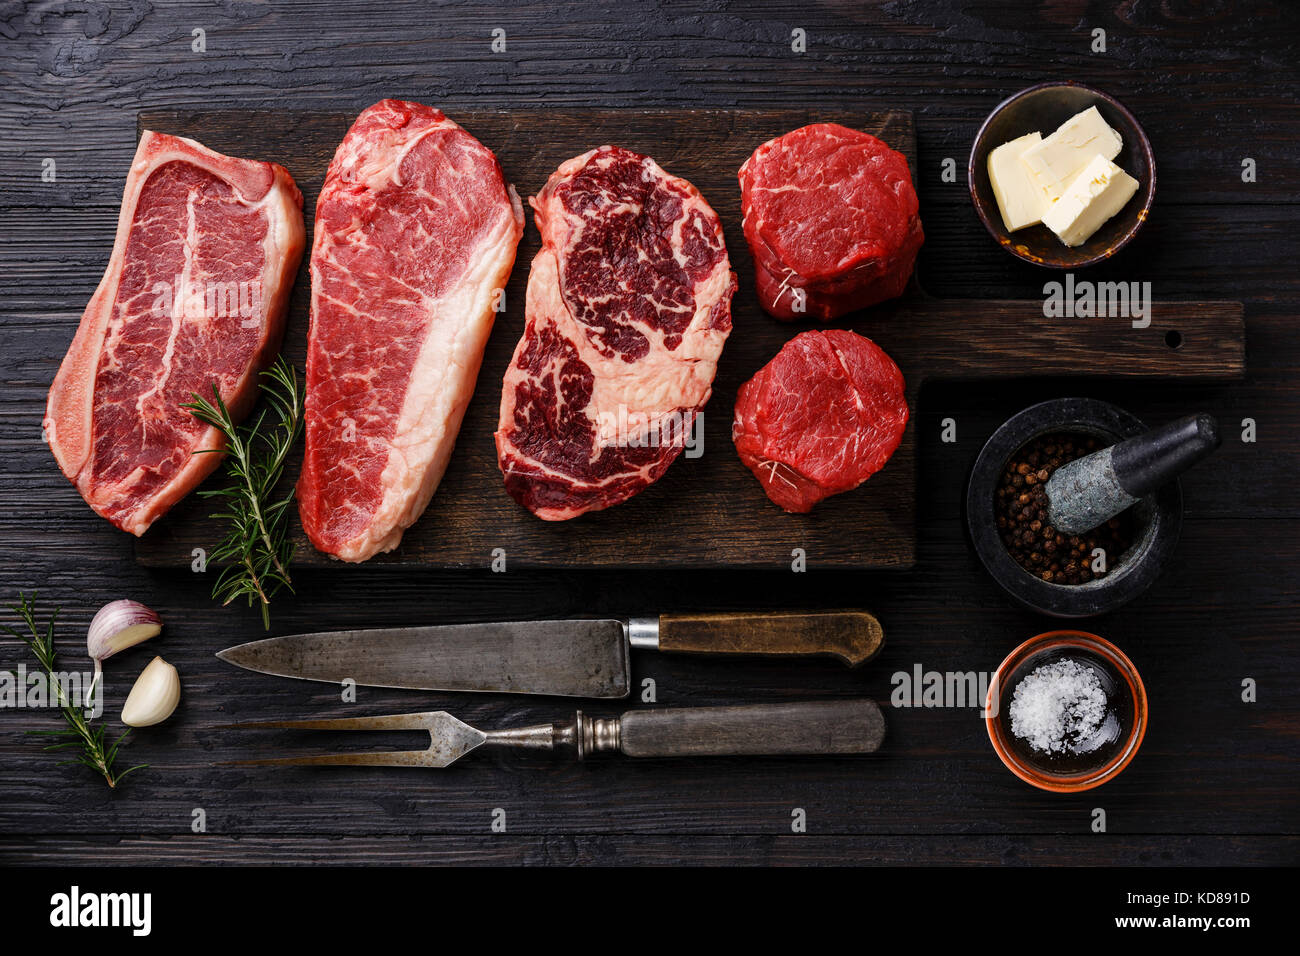 Variety of Raw Black Angus Prime meat steaks Blade on bone, Striploin, Rib eye, Tenderloin fillet mignon on wooden board and seasoning Stock Photo